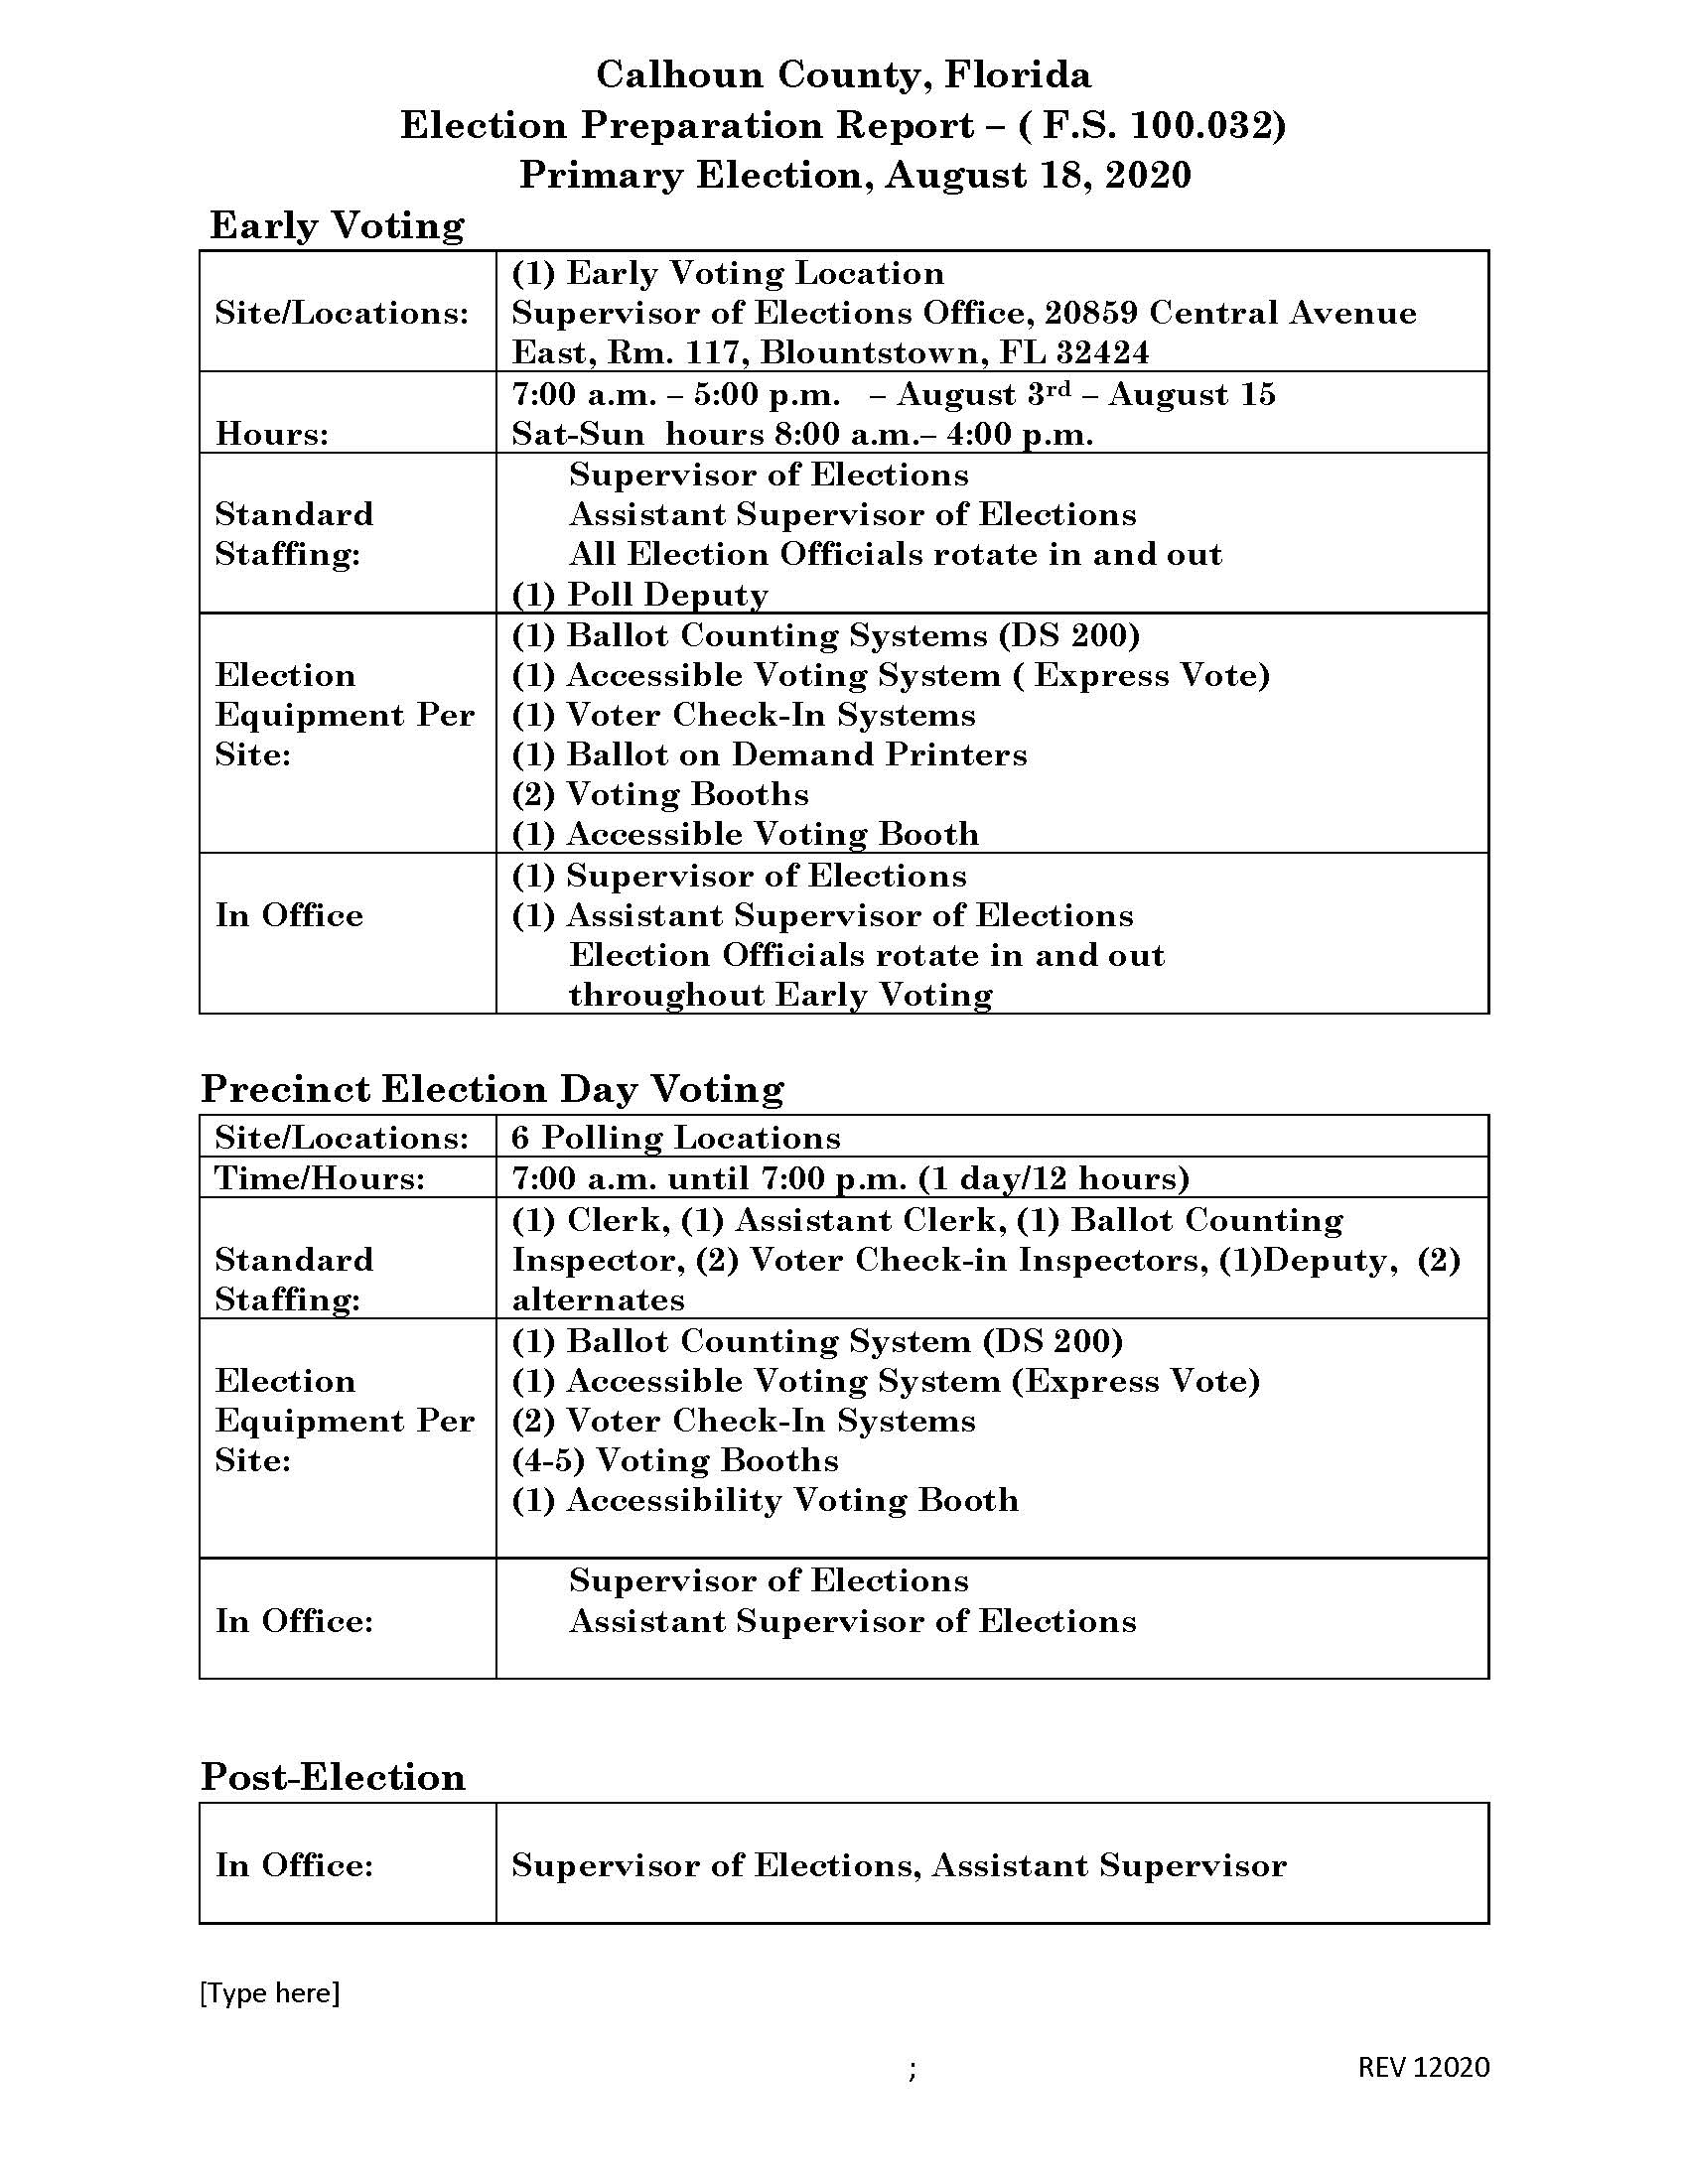 2020  Primary Election Preparation Report